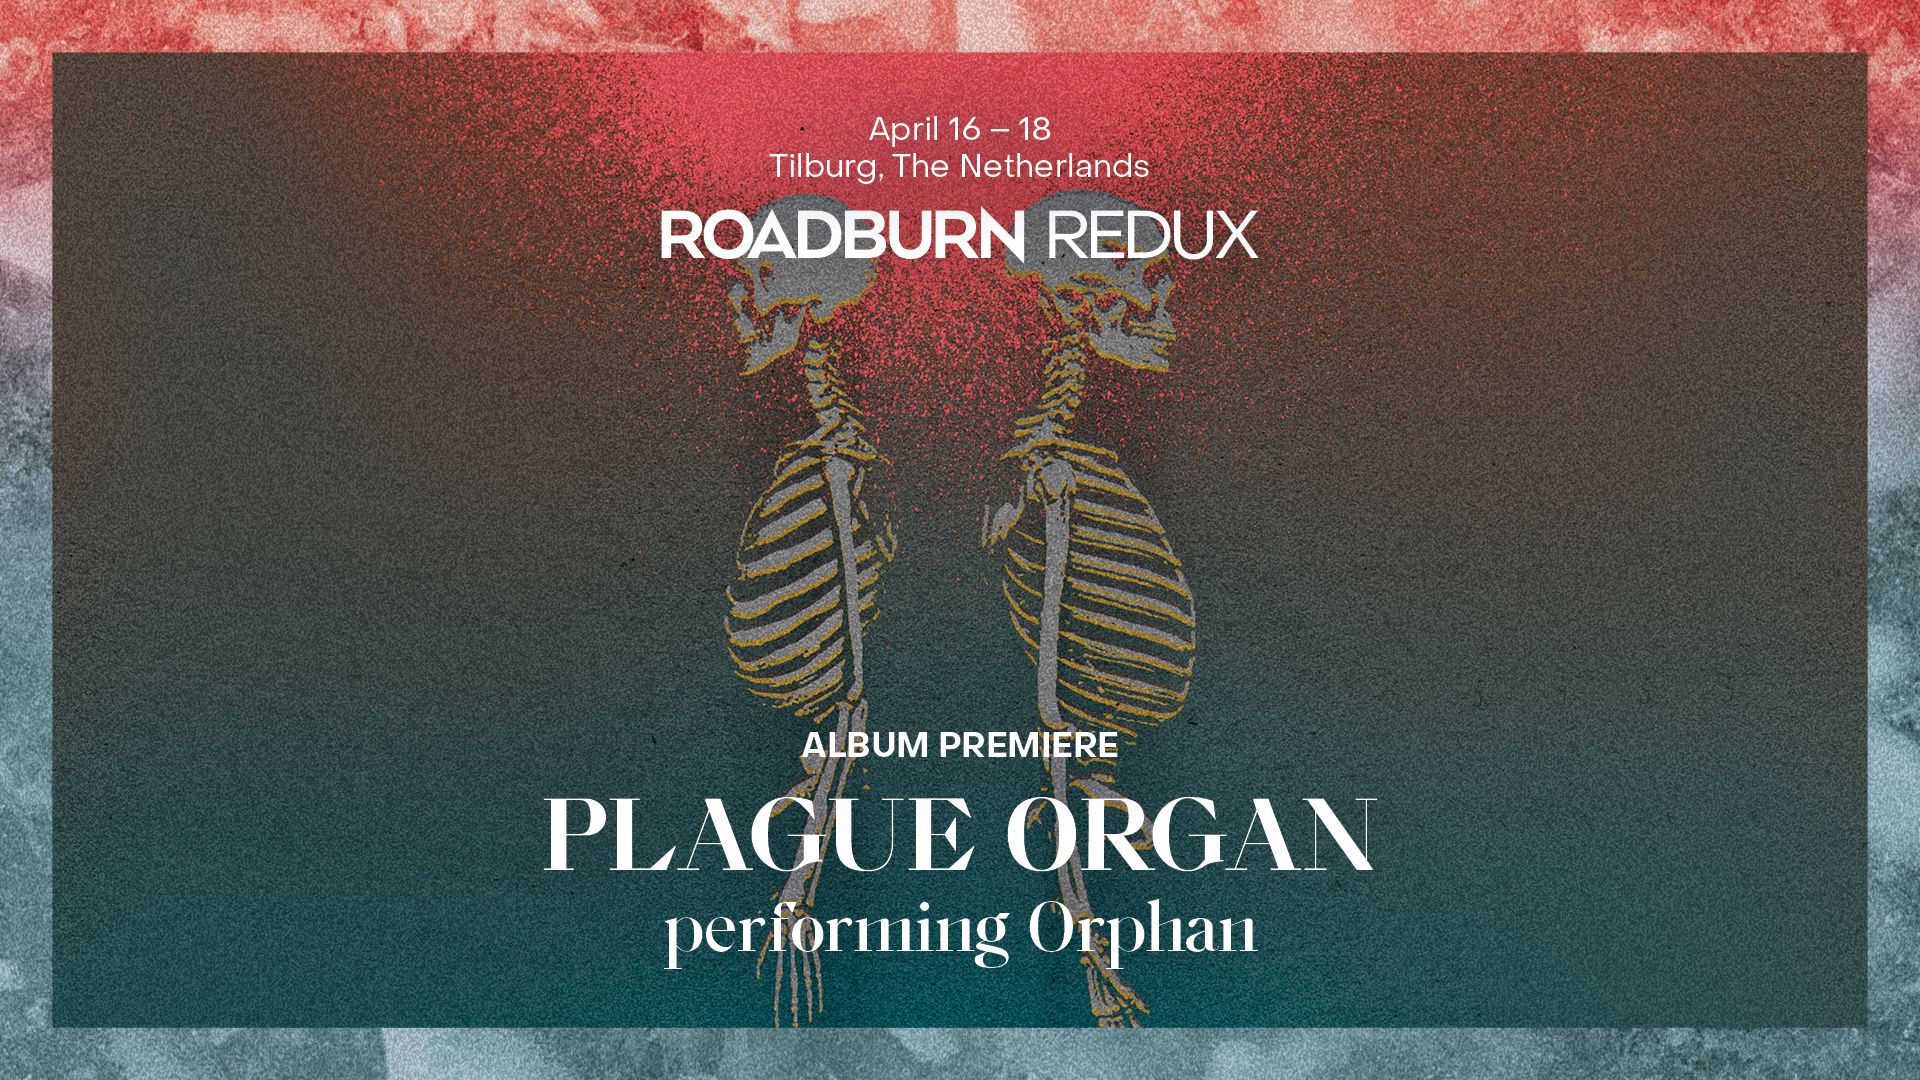 Roadburn & LGW present: Plague Organ performing Orphan as part of Roadburn Redux